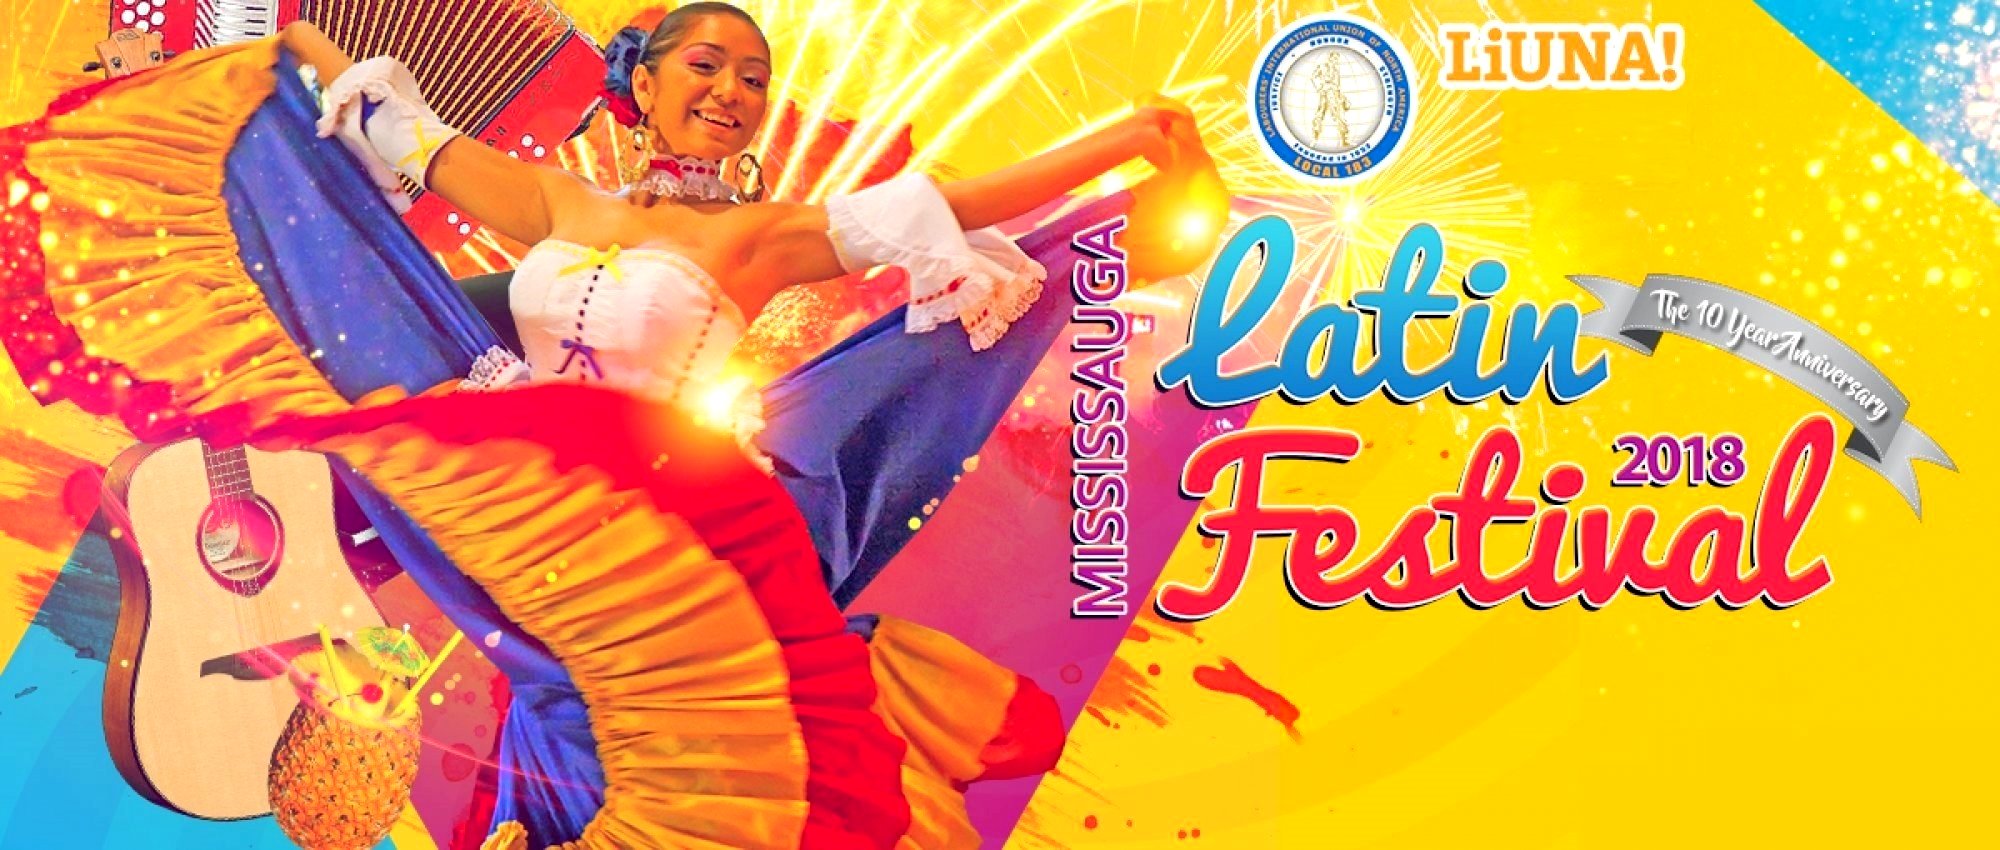 Mississauga Latin Festival Google image from https://culture.mississauga.ca/event/celebration-square/mississauga-latin-festival-1